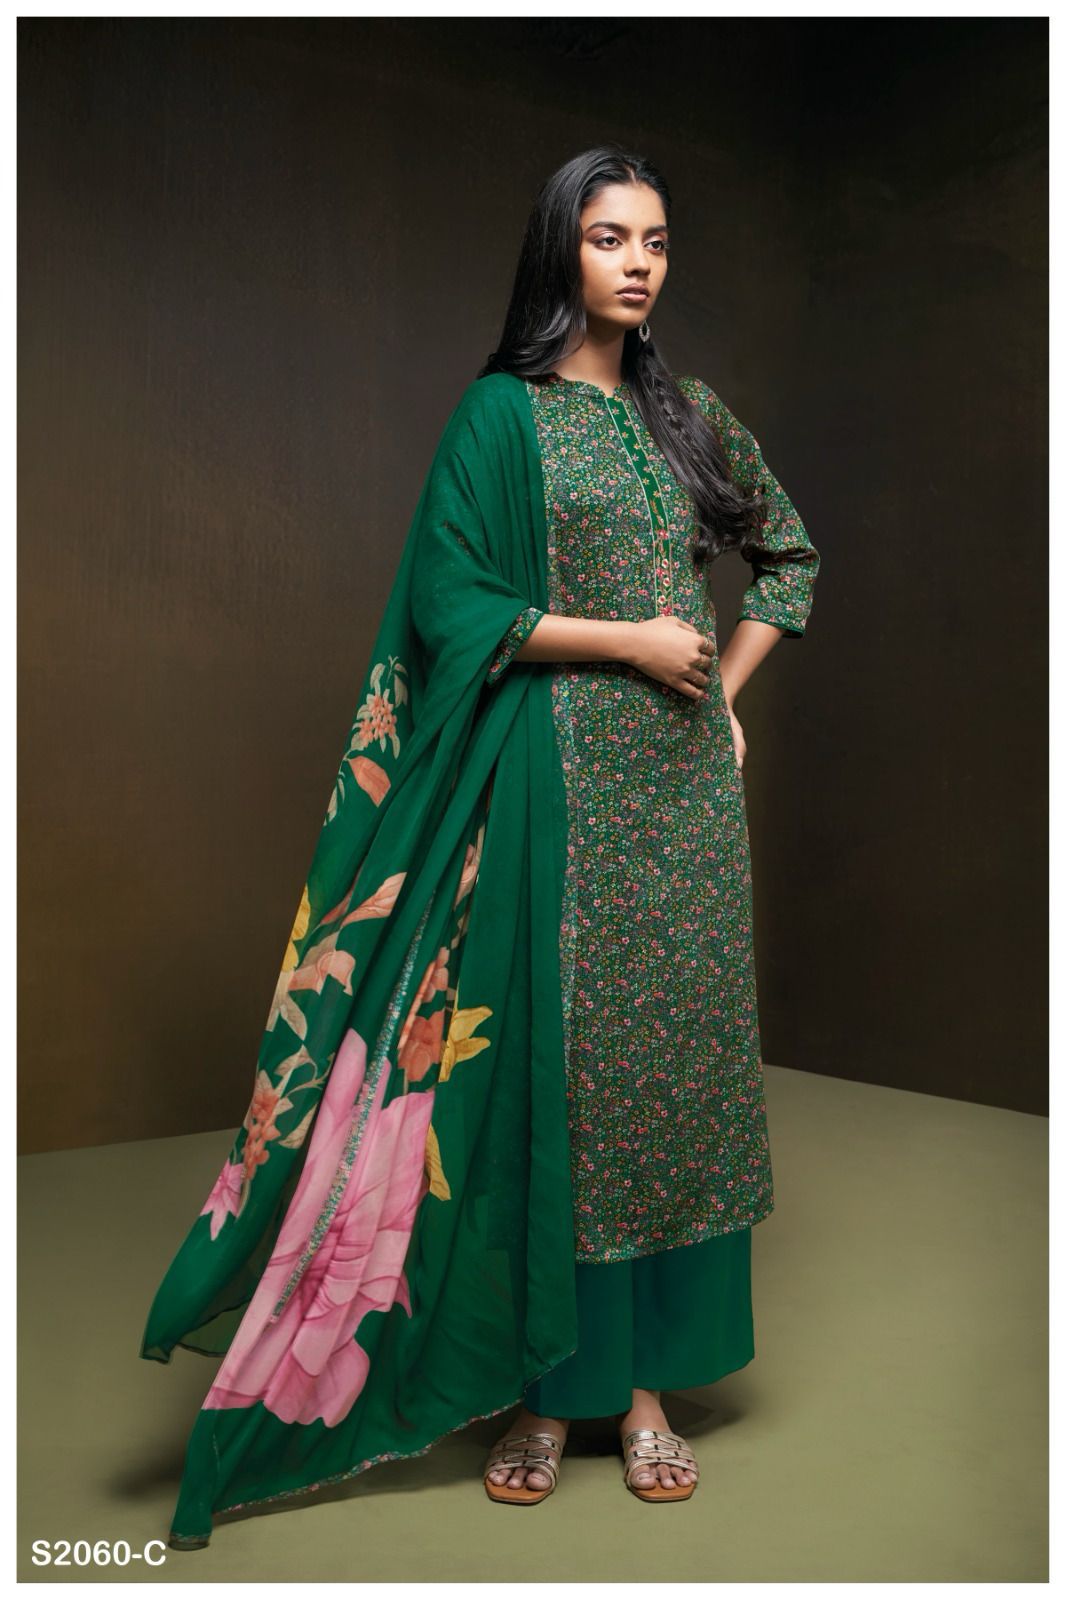 Koa 2060 Ganga Cotton Satin Plazzo Style Suits